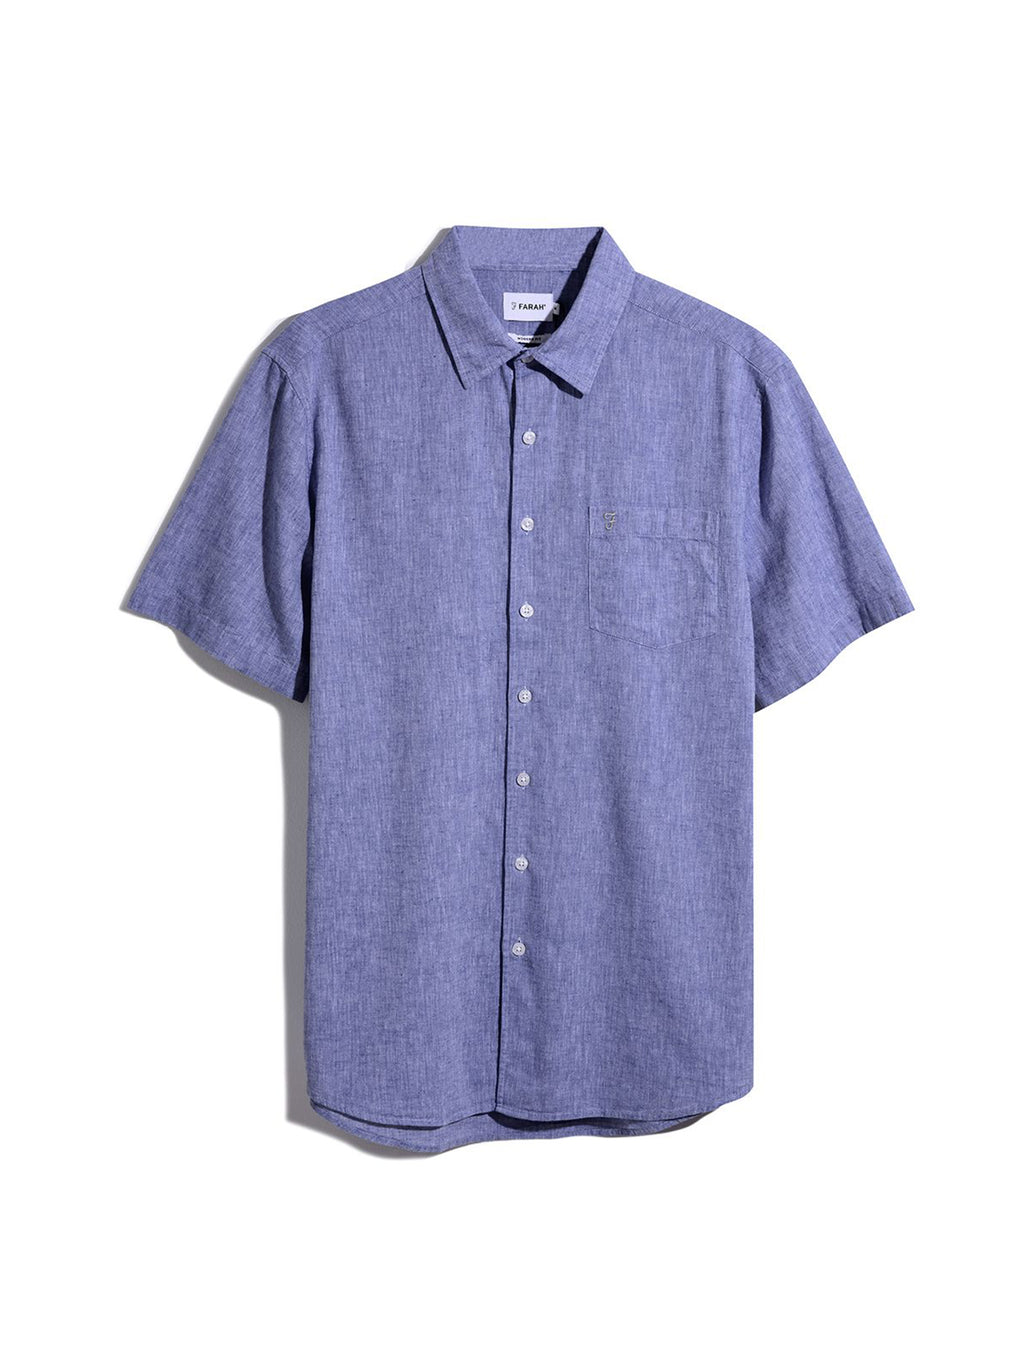 farah-shirt-short-sleeve-blue-FAWSD030